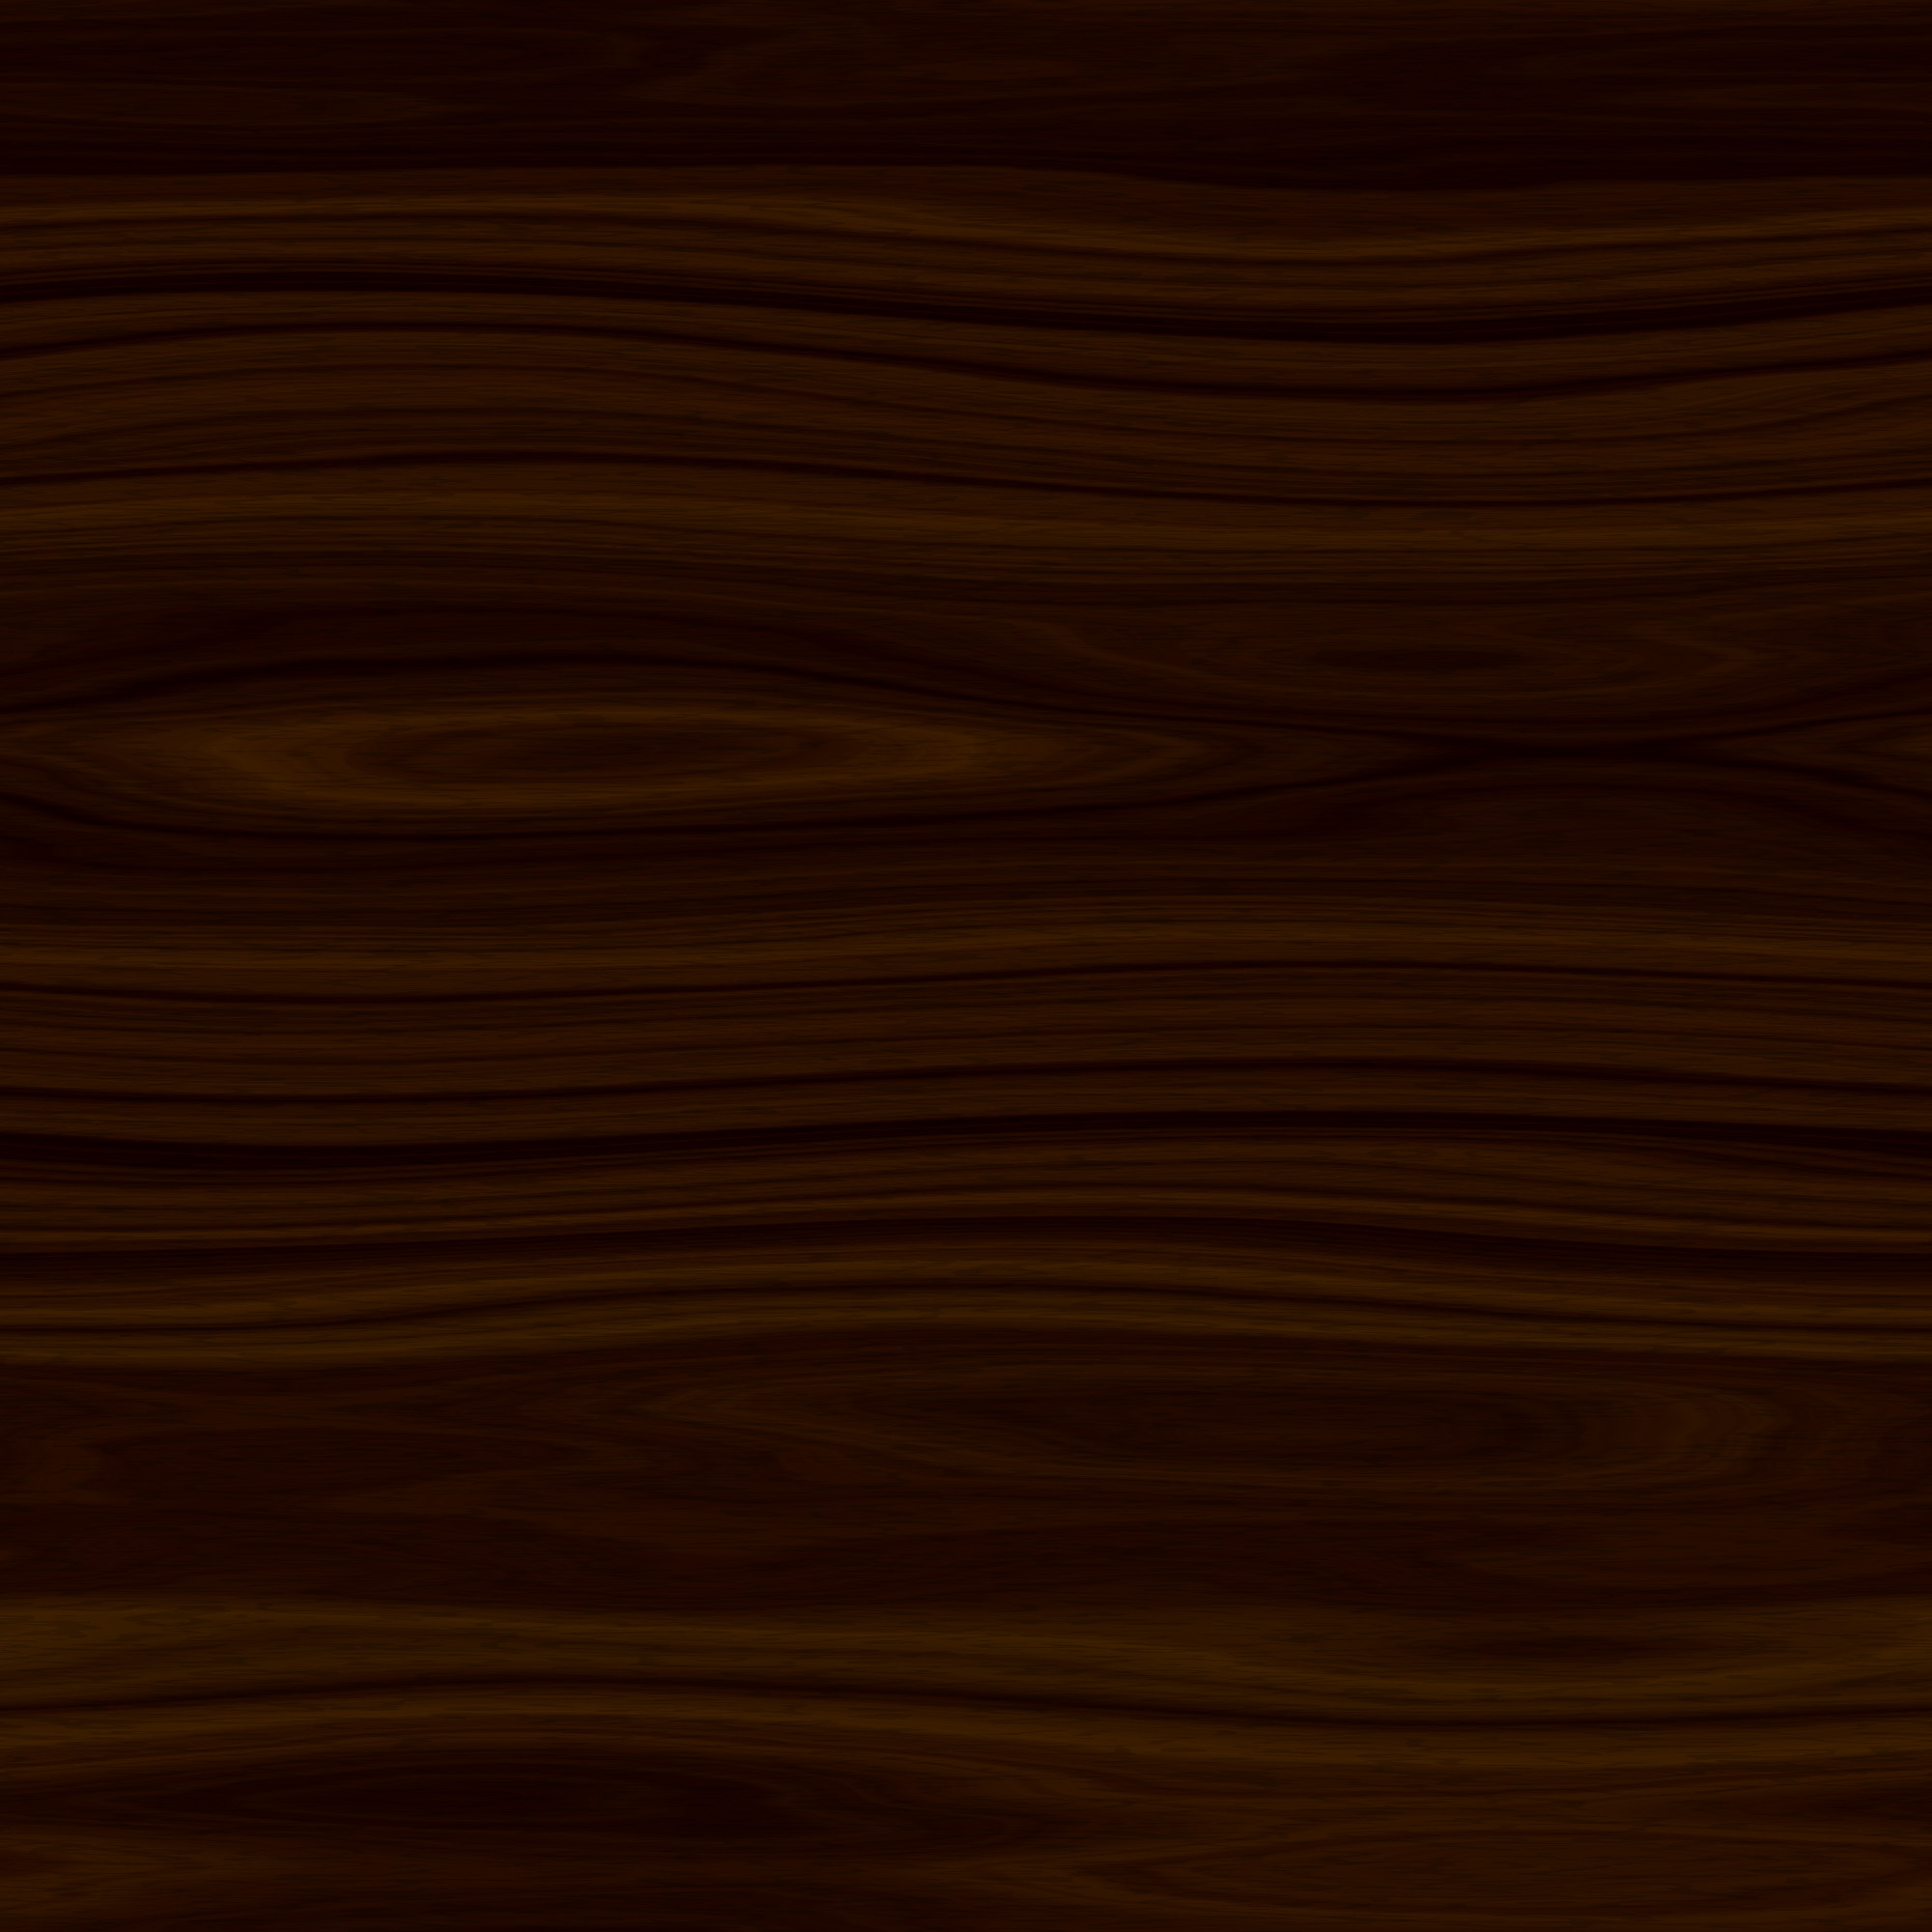 A dark and deep seamless wood texture | www.myfreetextures.com | Free